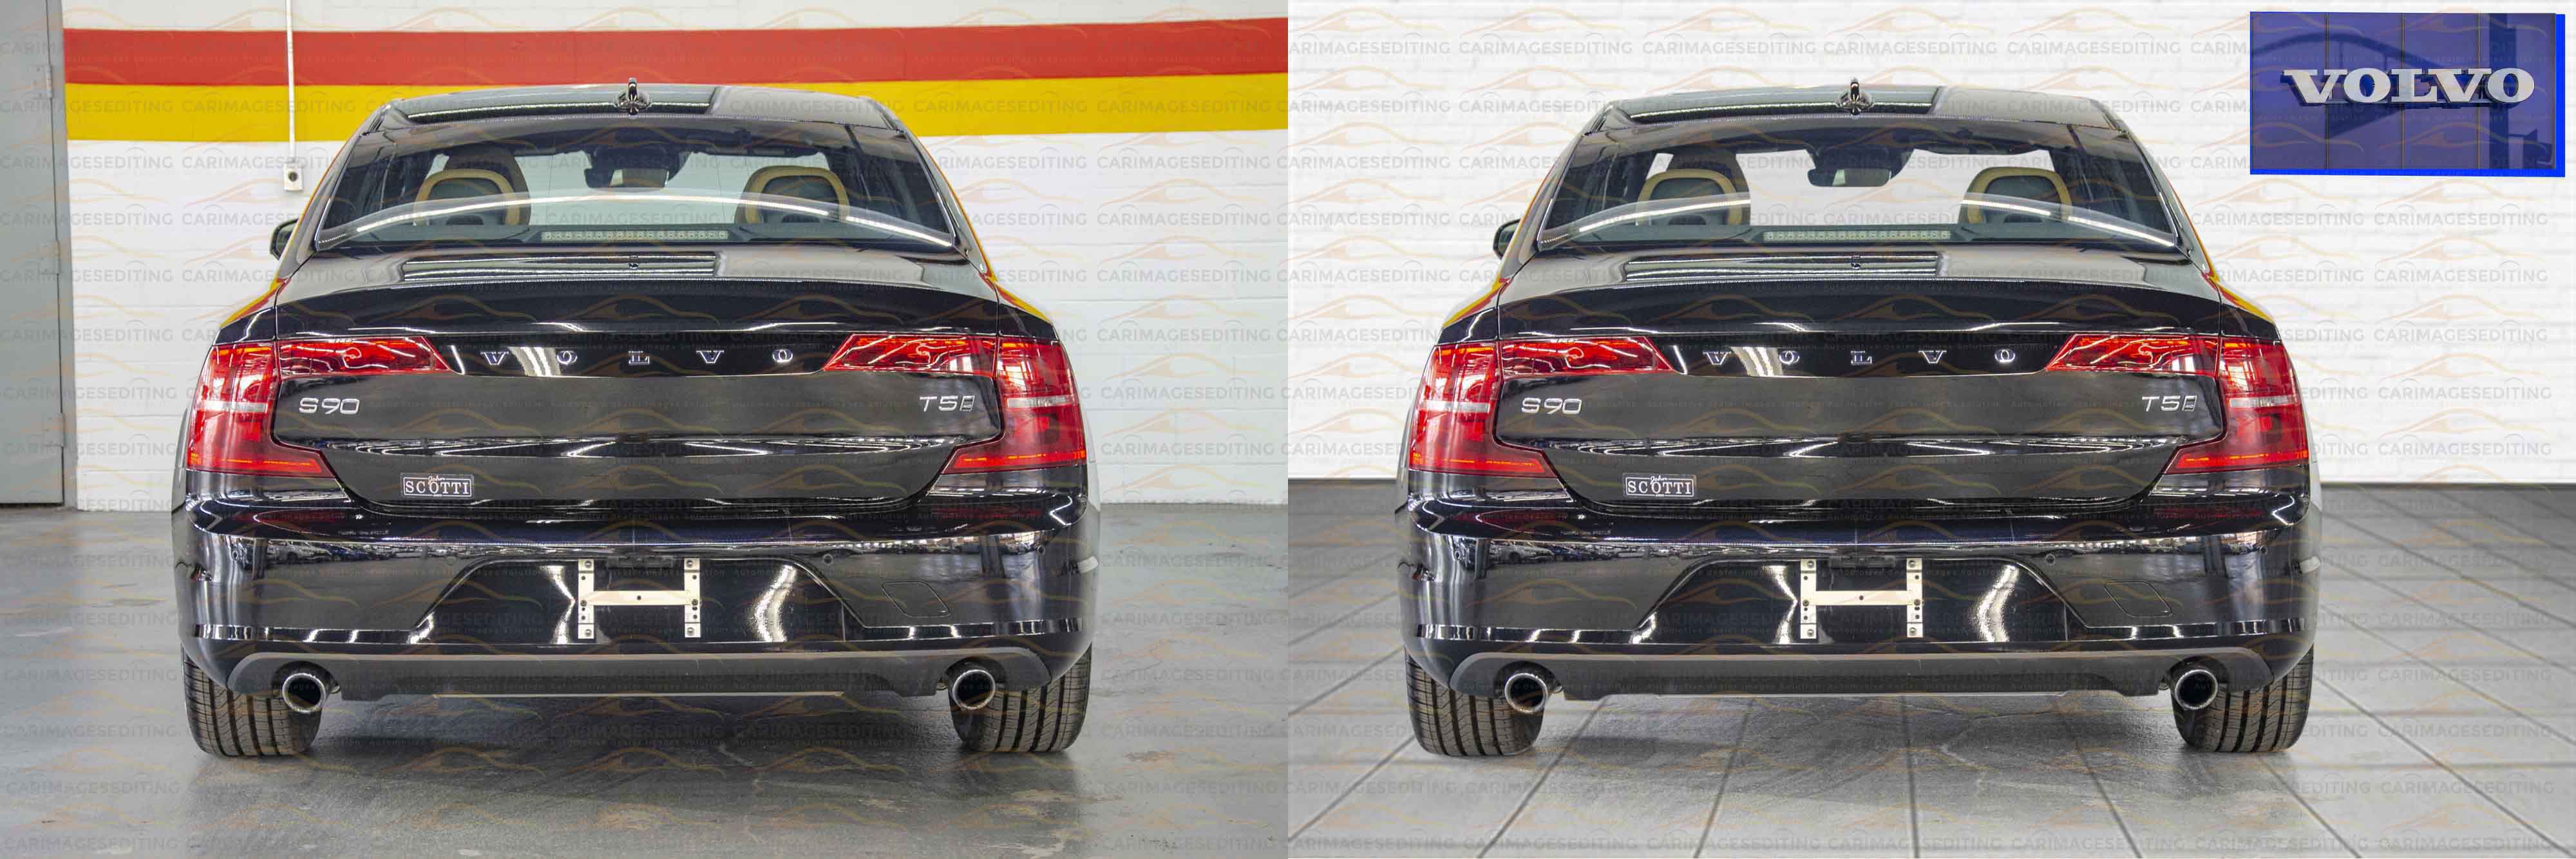 Car image editing | Car Background Replacement | Car Photo Editing